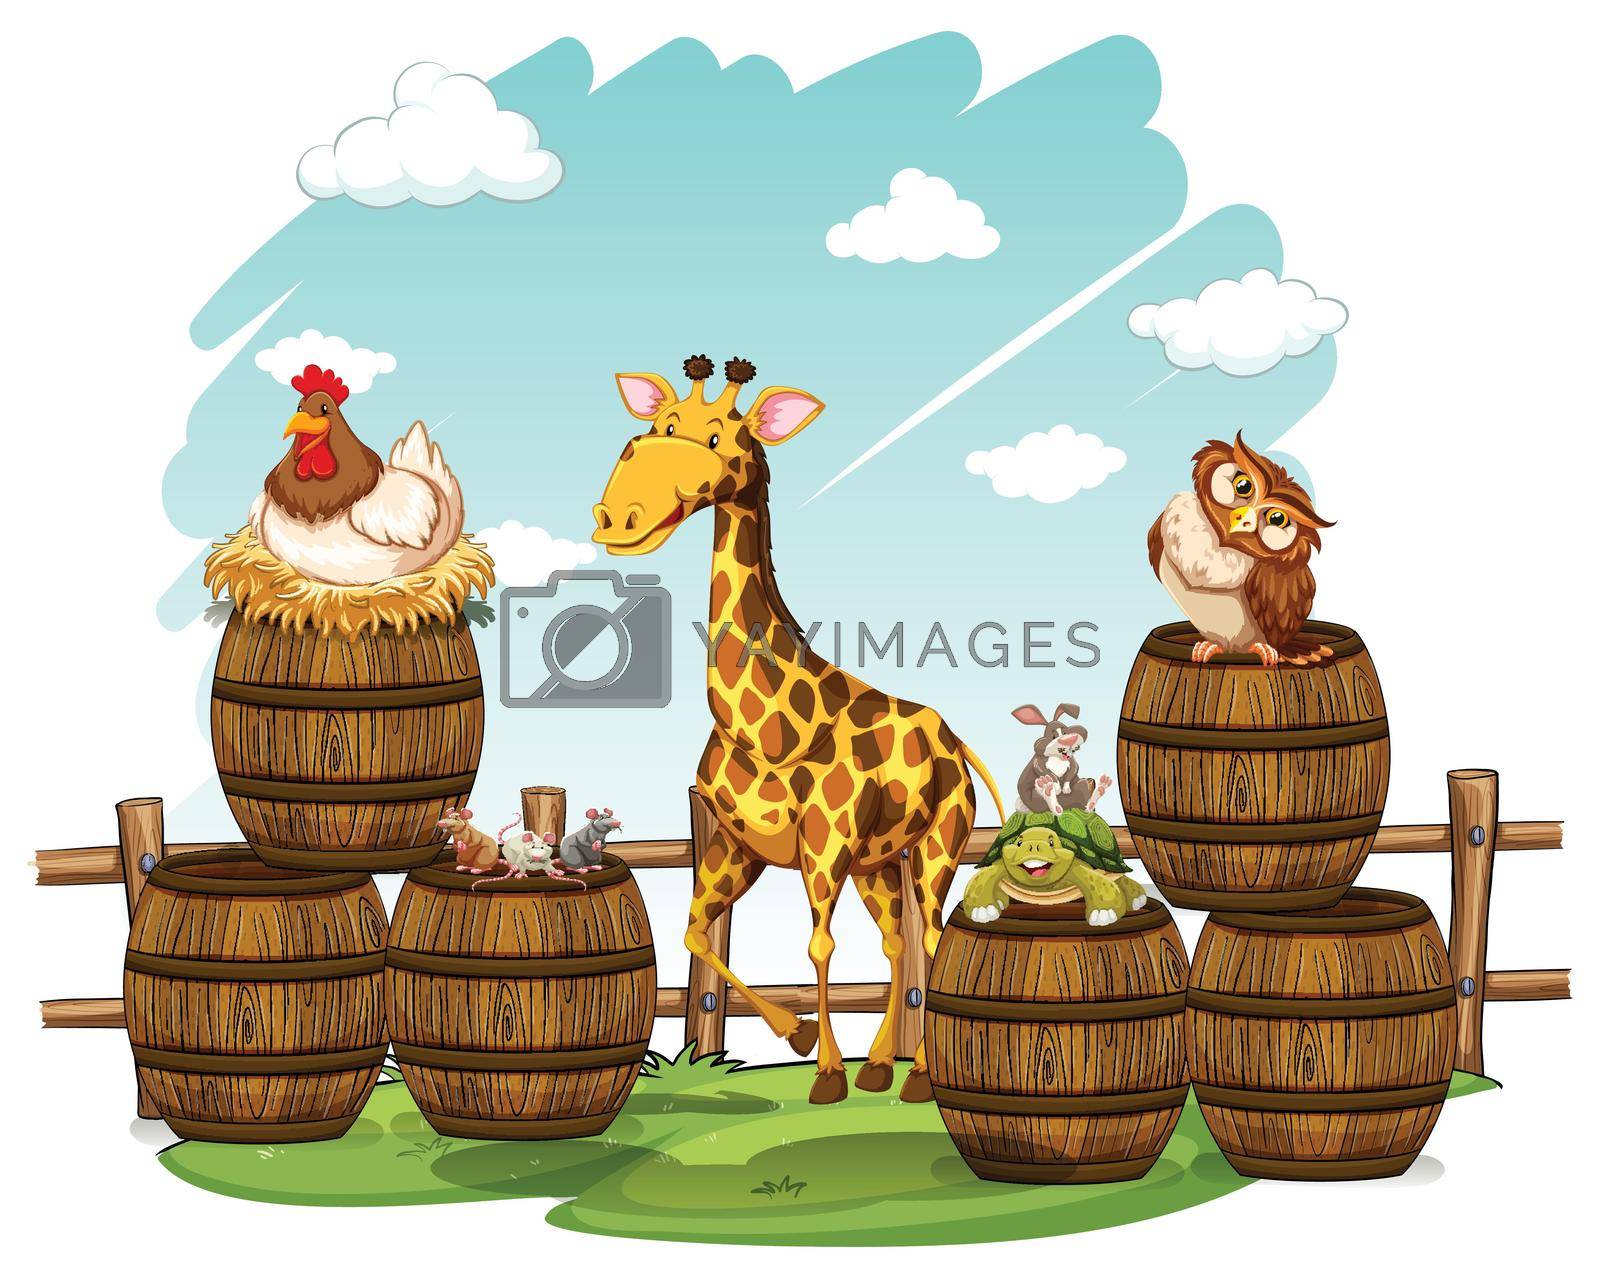 Animals on the barrels illustration